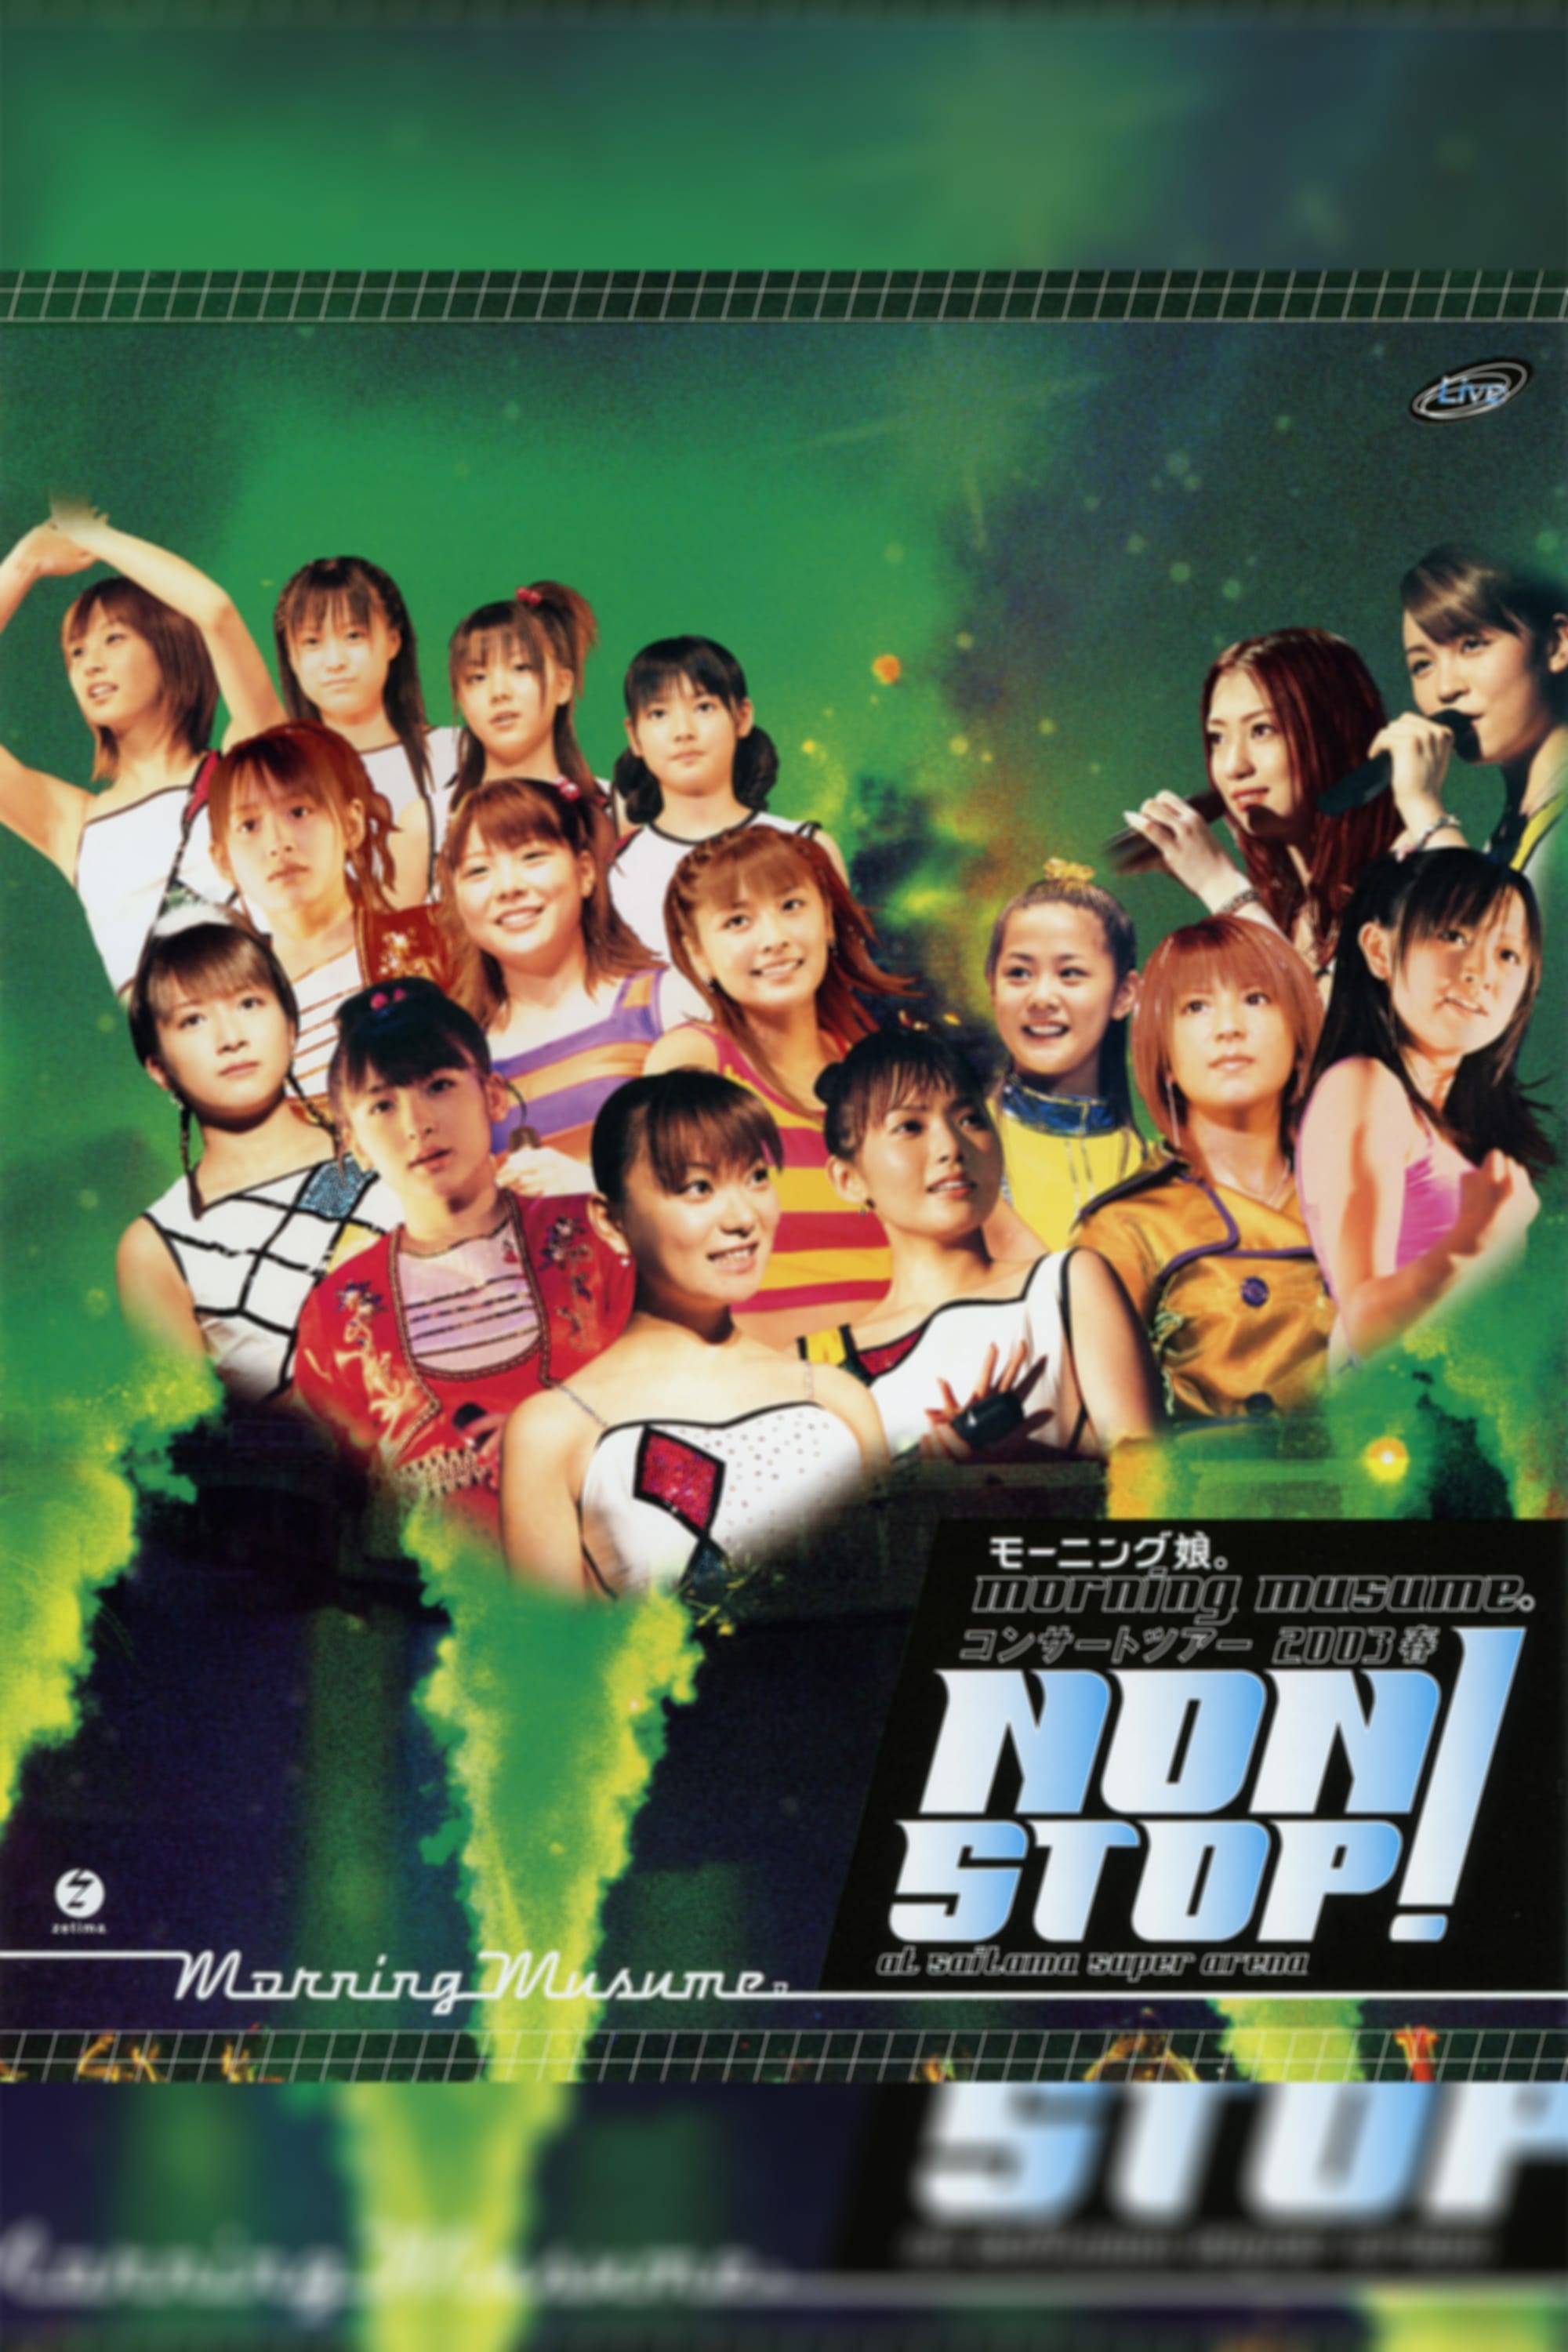 Morning Musume. 2003 Spring "NON STOP!"